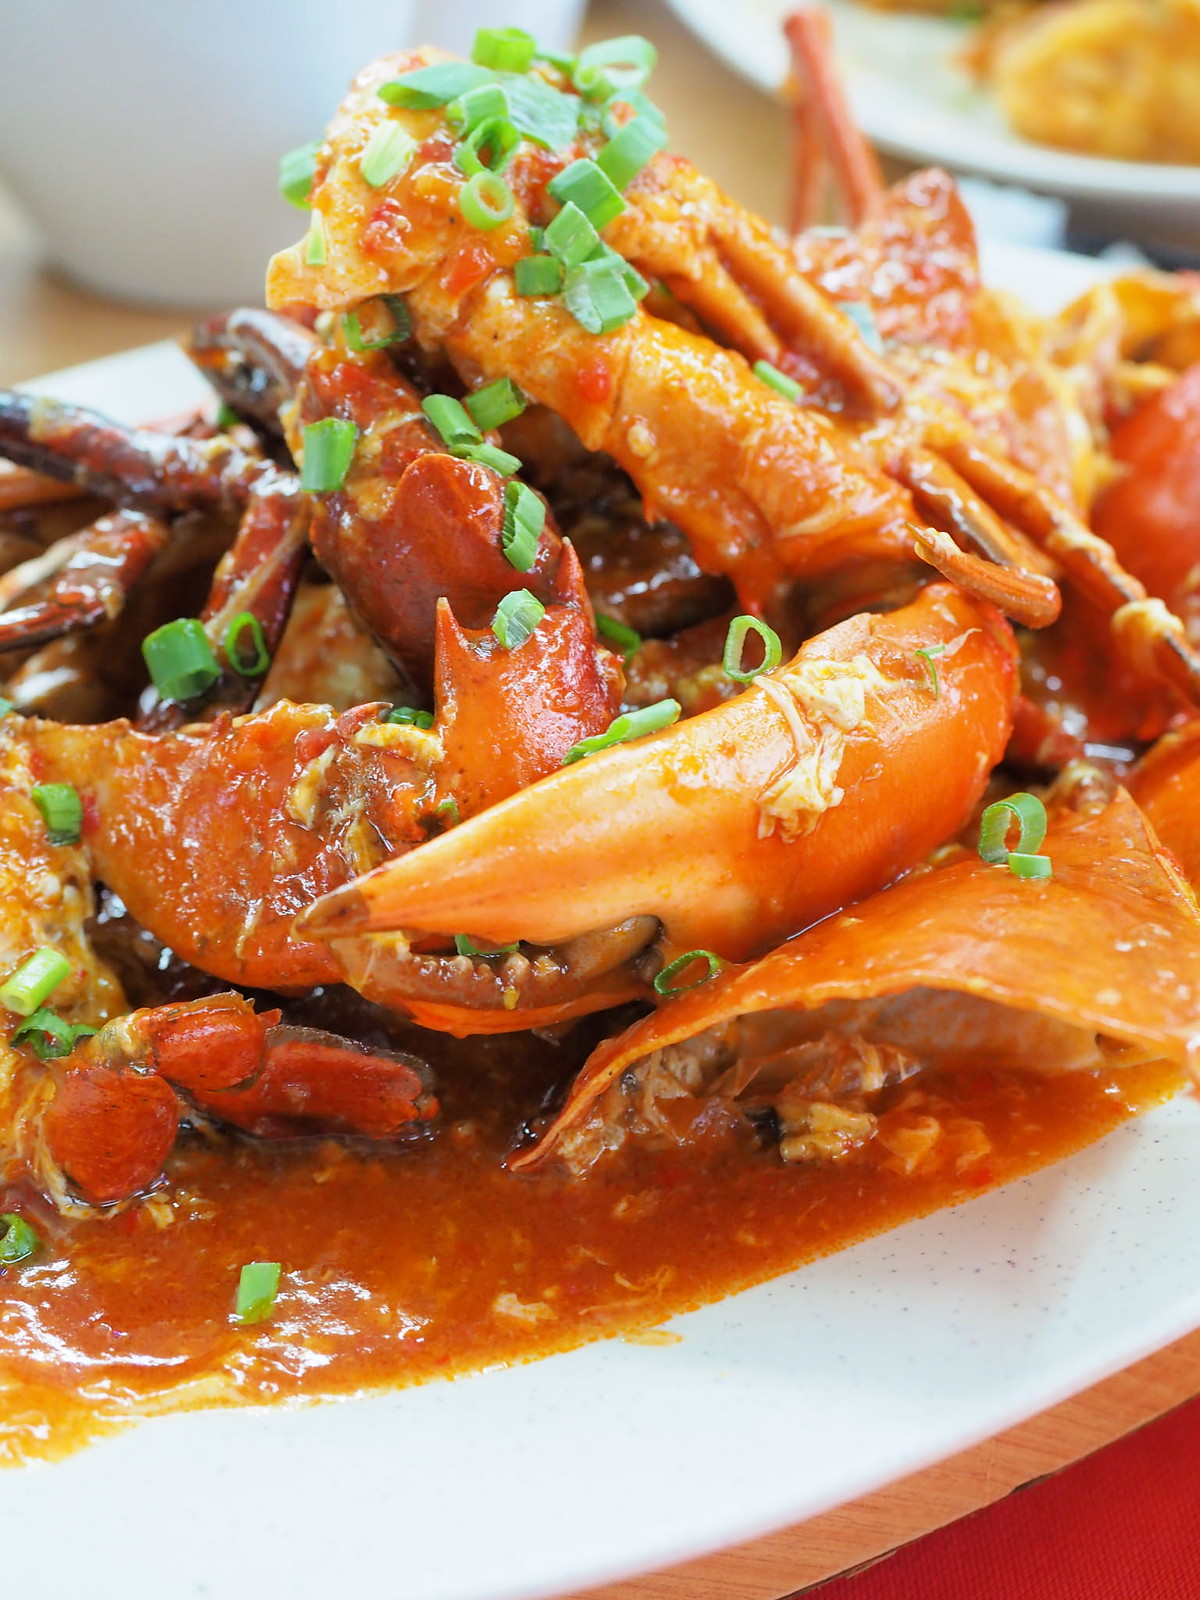 Sweet and Sour crab at Pangkor Village Seafood, Taman Megah